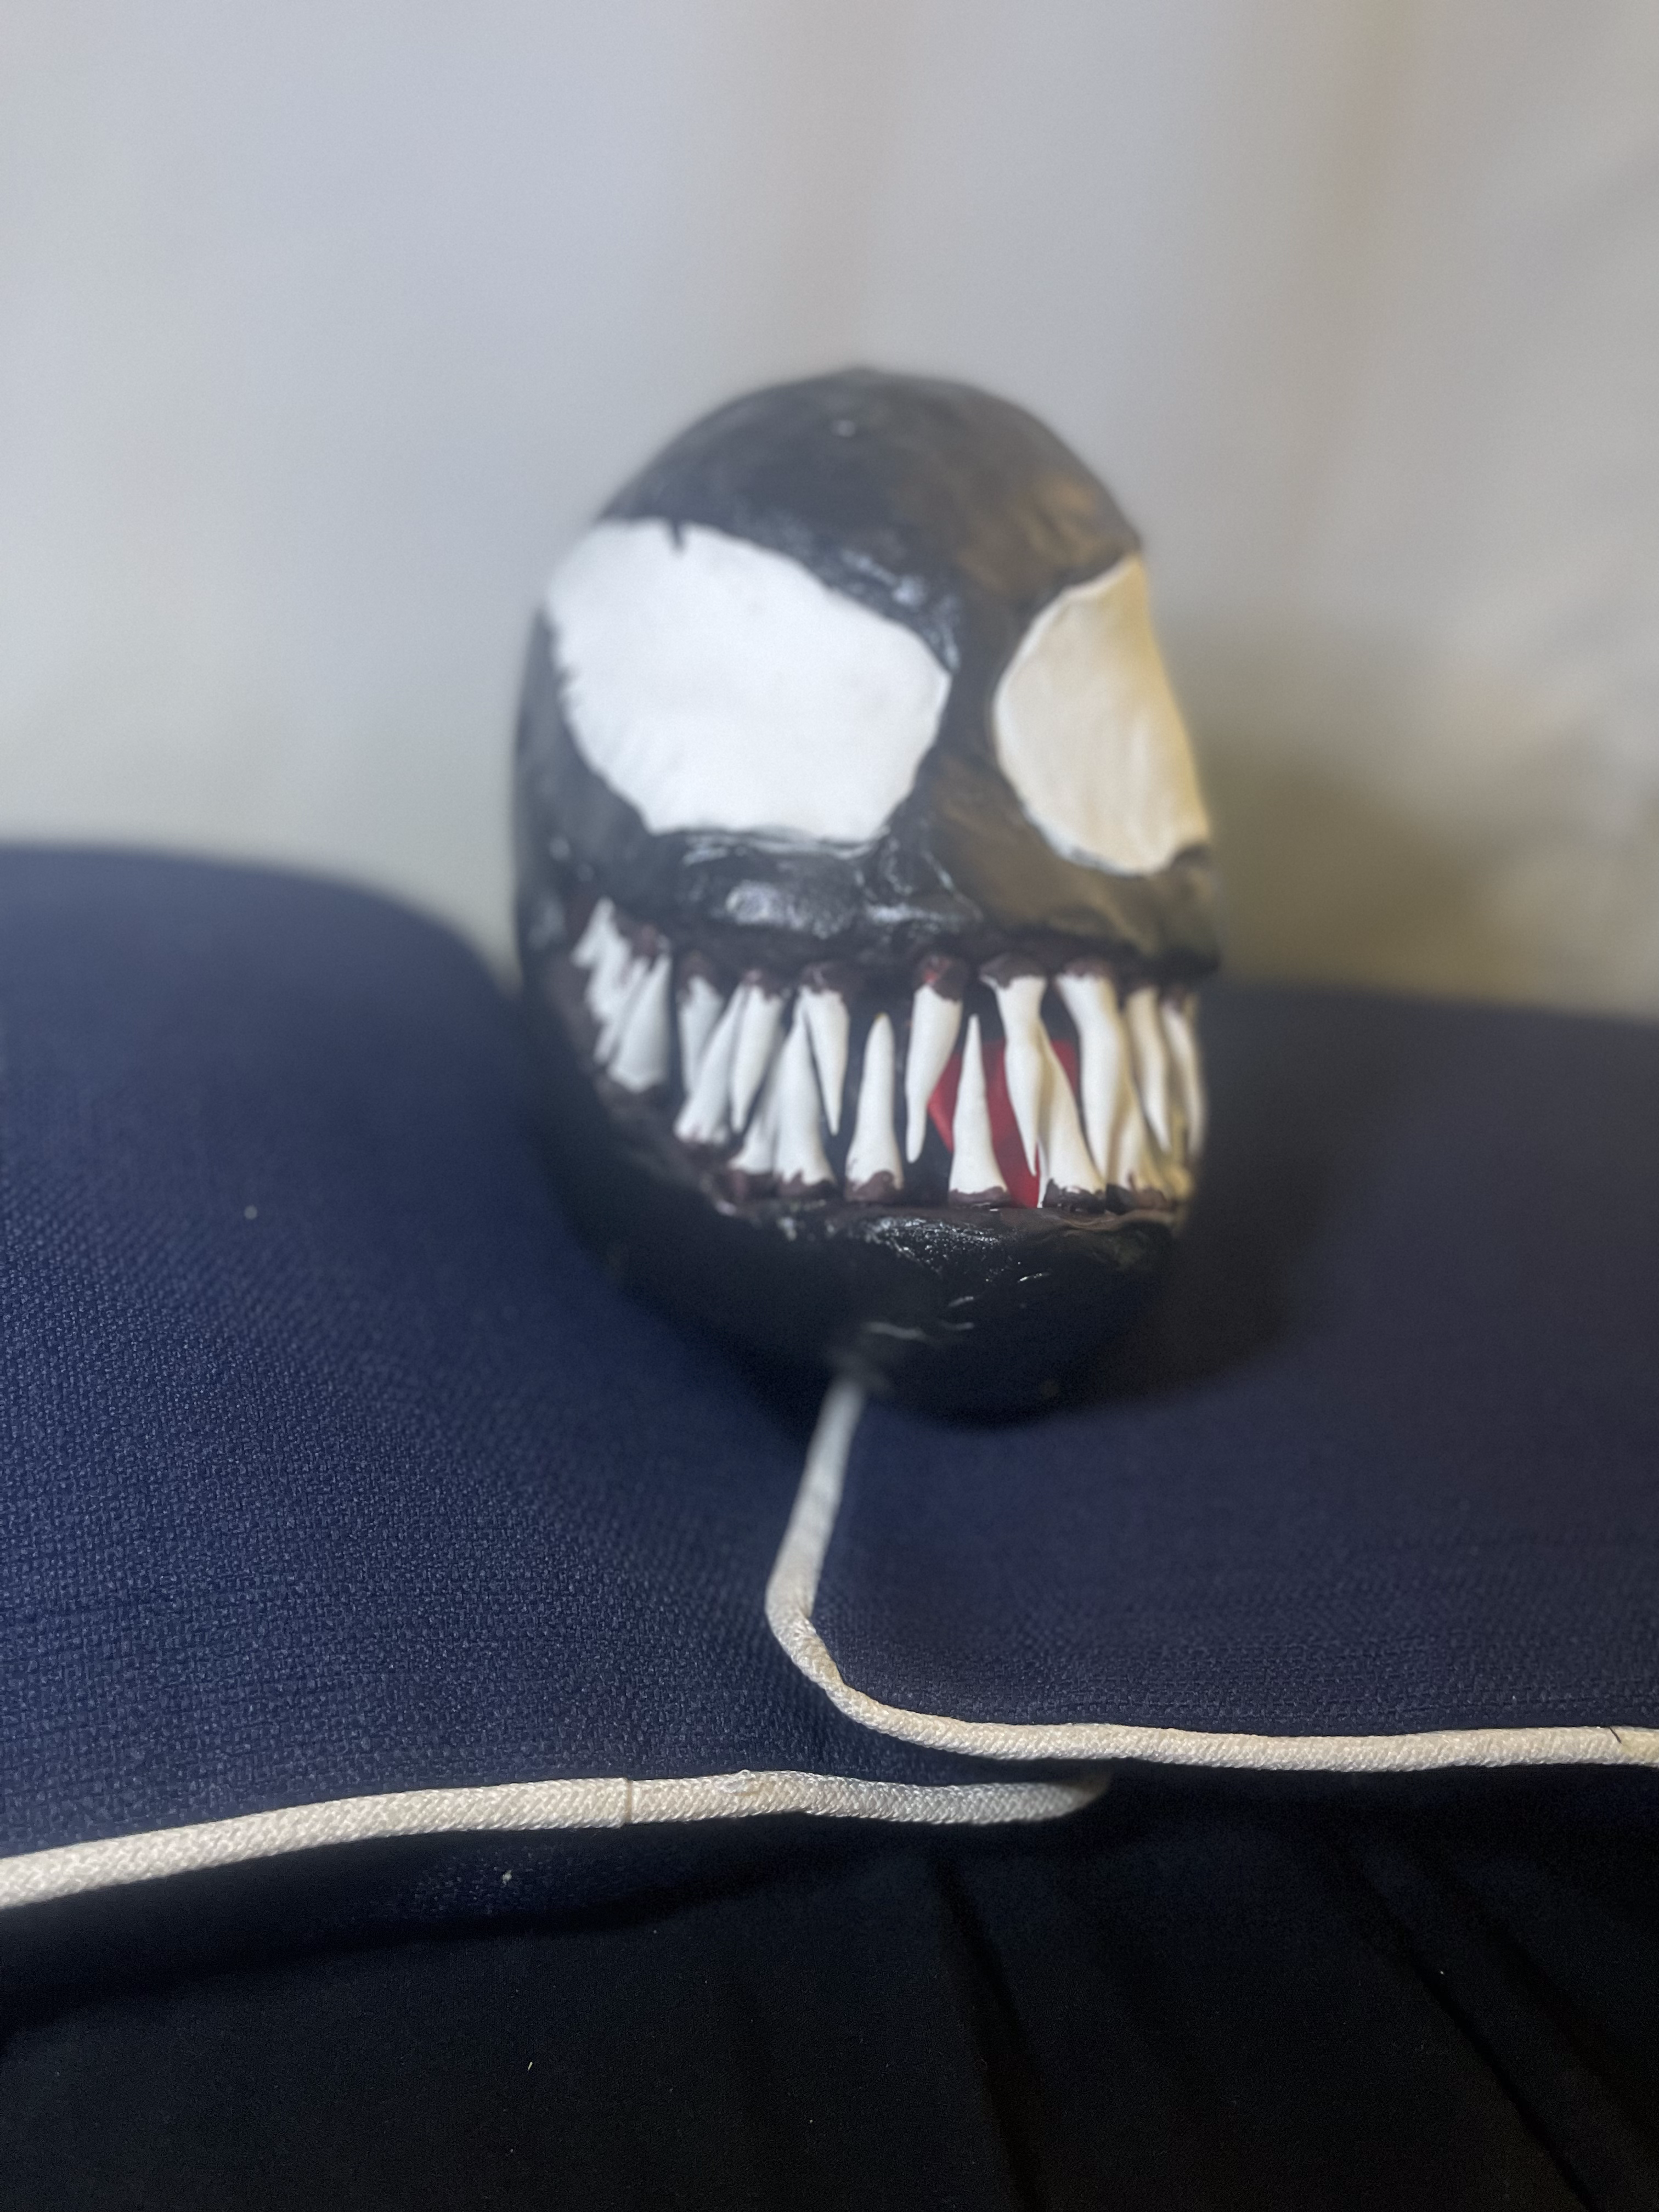 Venom Head made from EVA foam